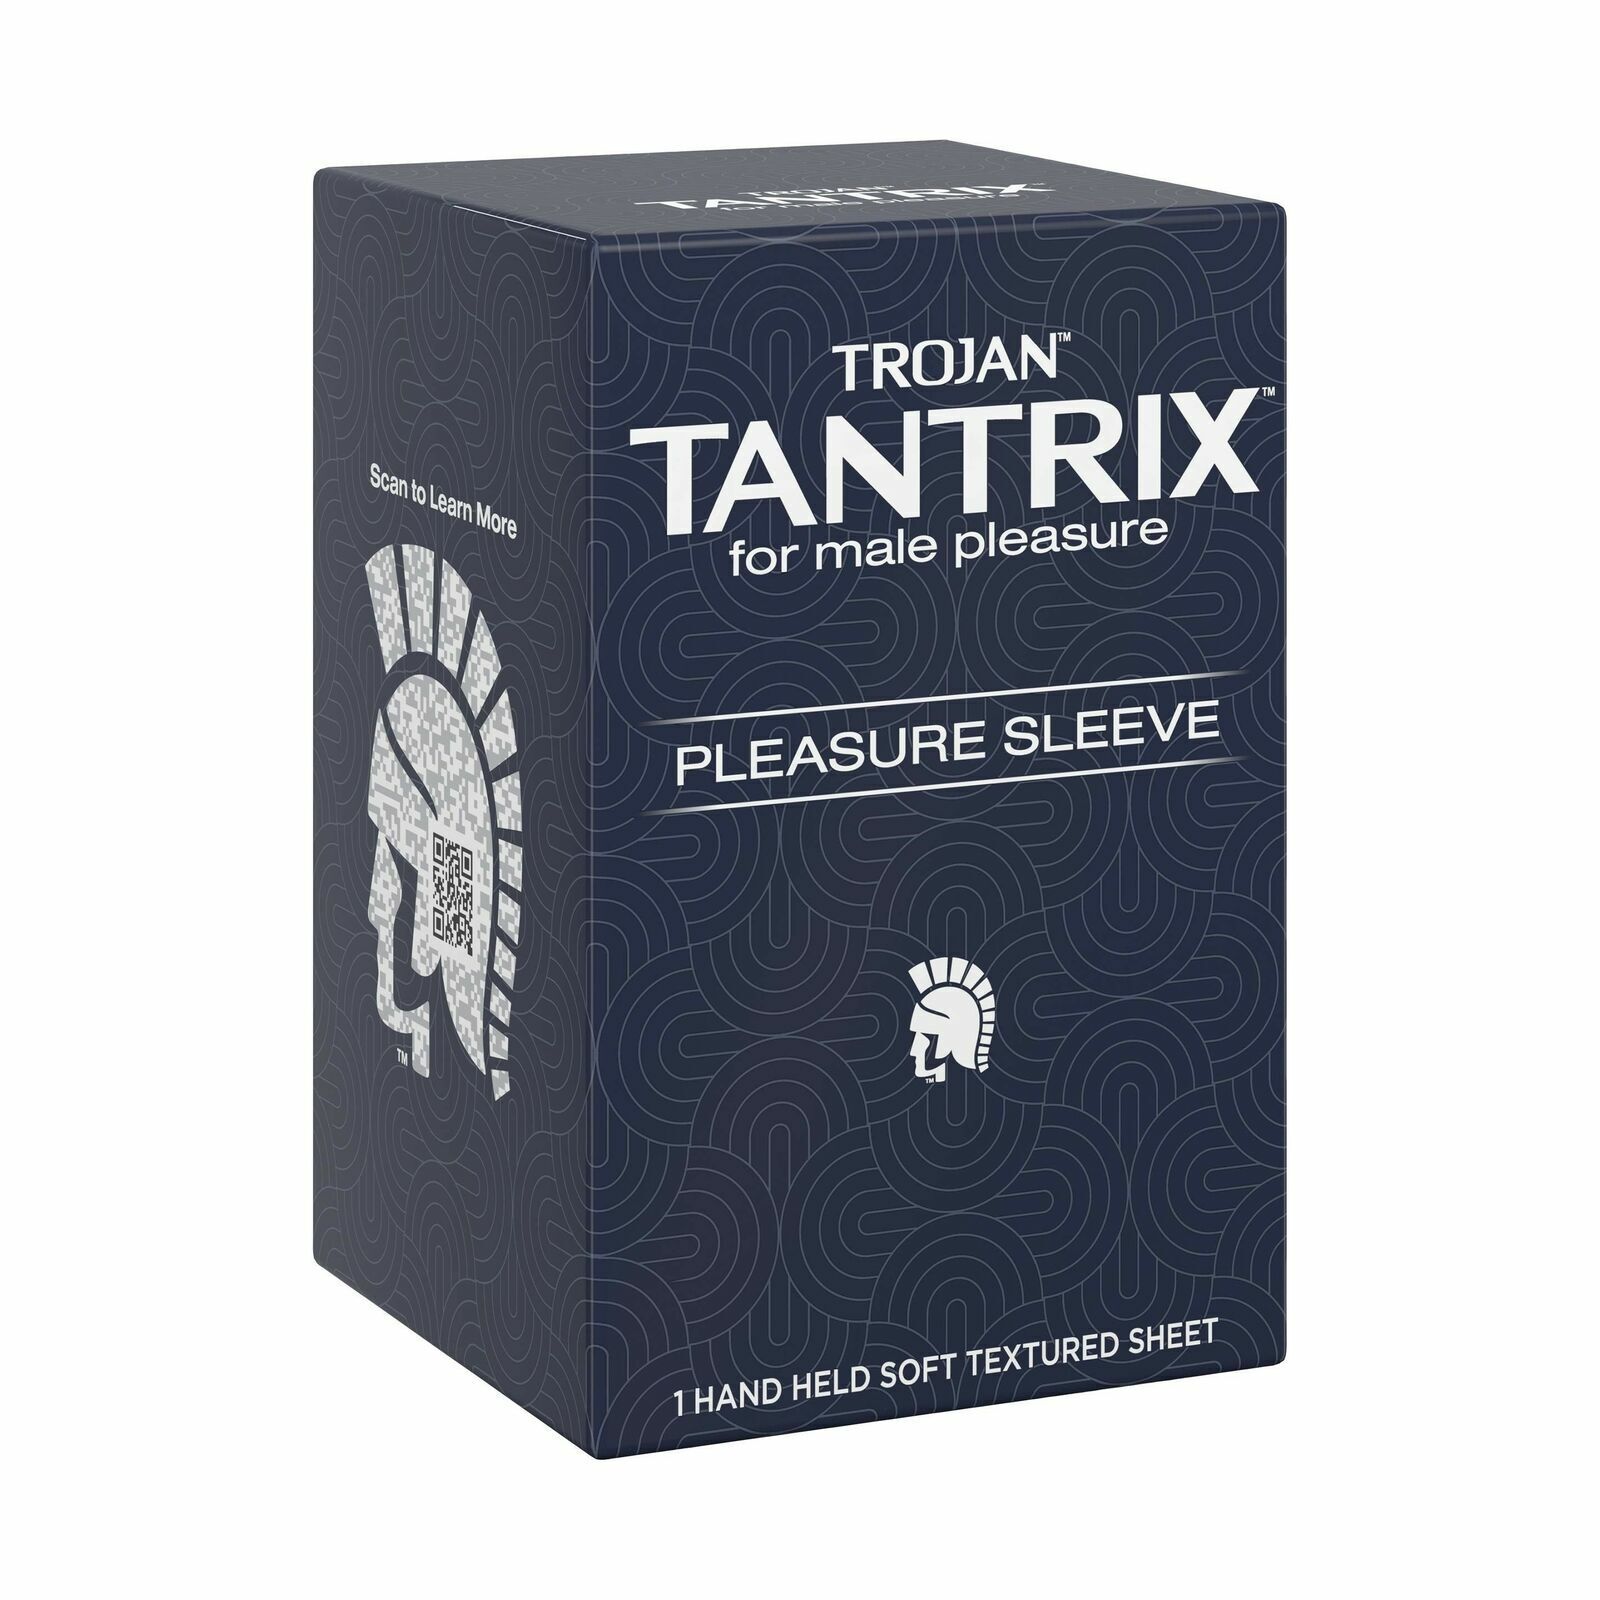 brenda pitre recommends Trojan Tantrix Pleasure Sleeve